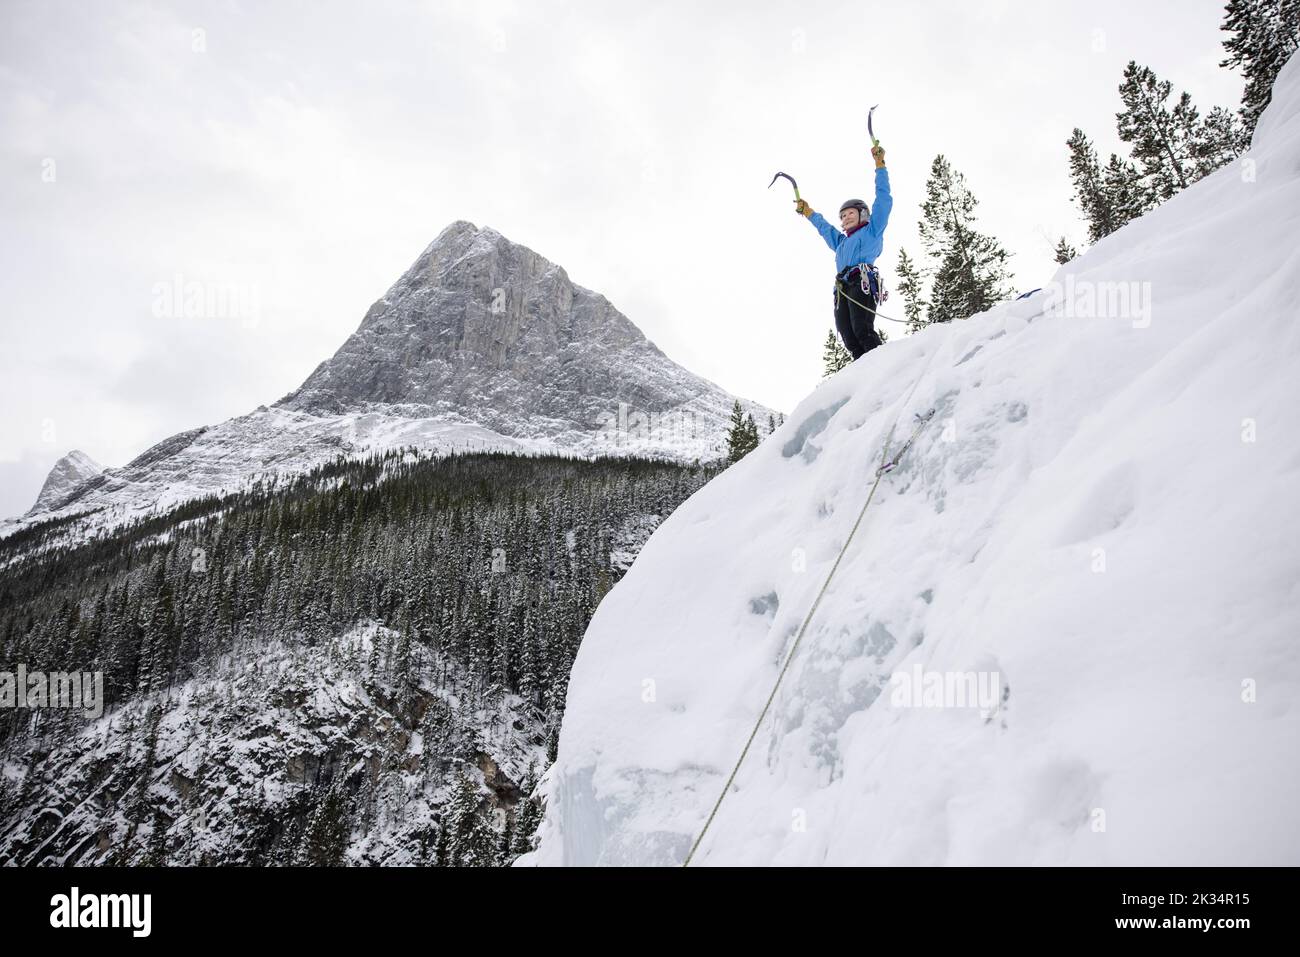 Ice climber rejoicing on peak of mountain Stock Photo